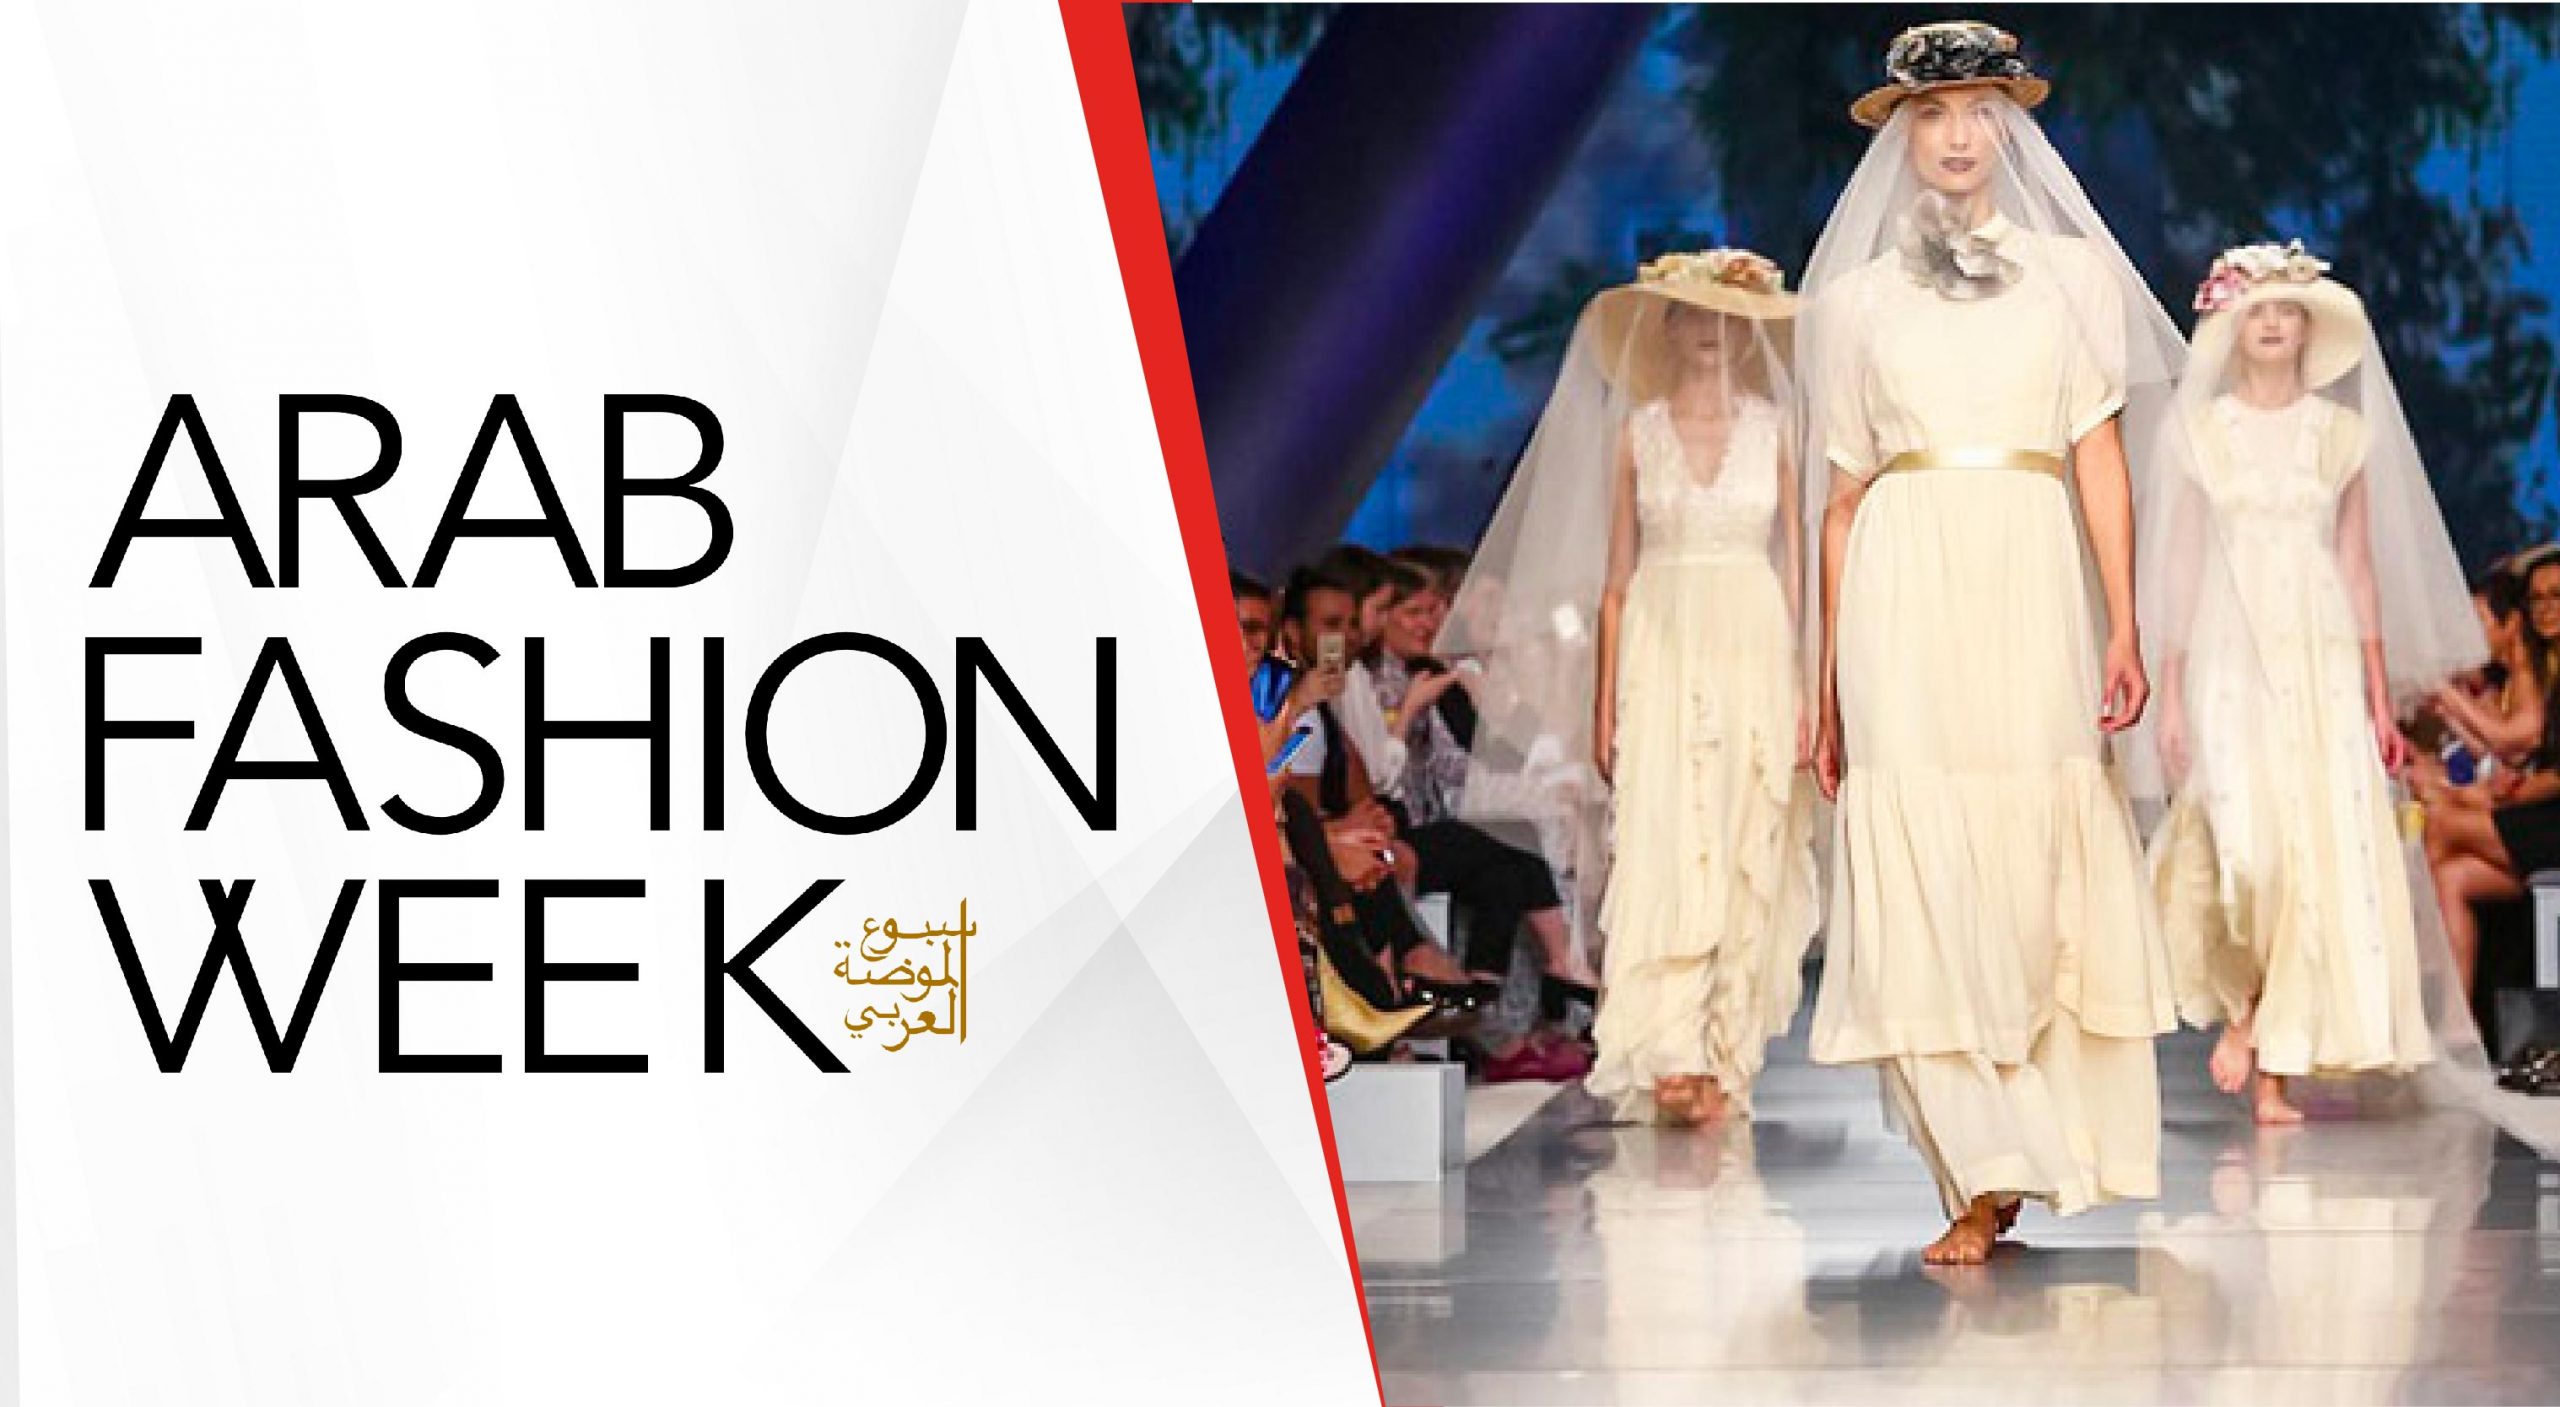 Highlights of Arab Fashion week 2020